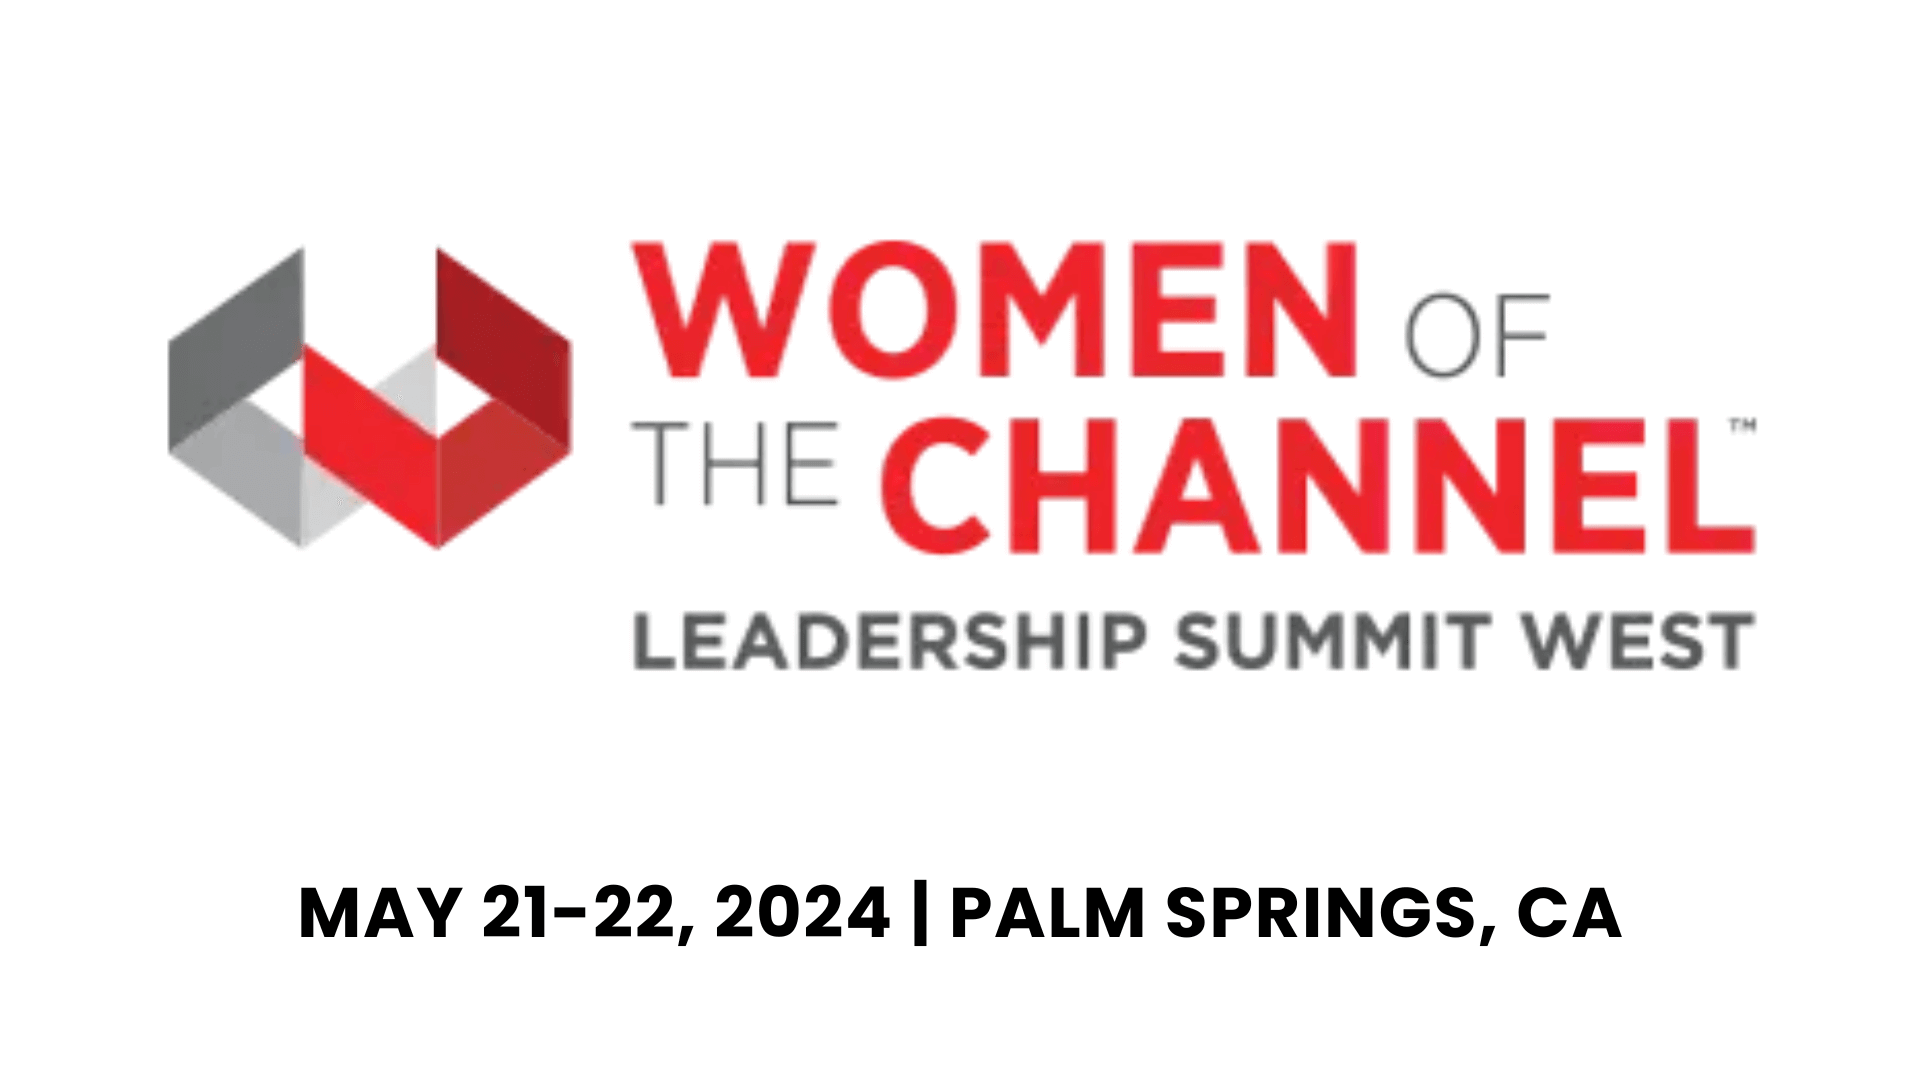 Women of the Channel Leadership Summit West 2024 logo